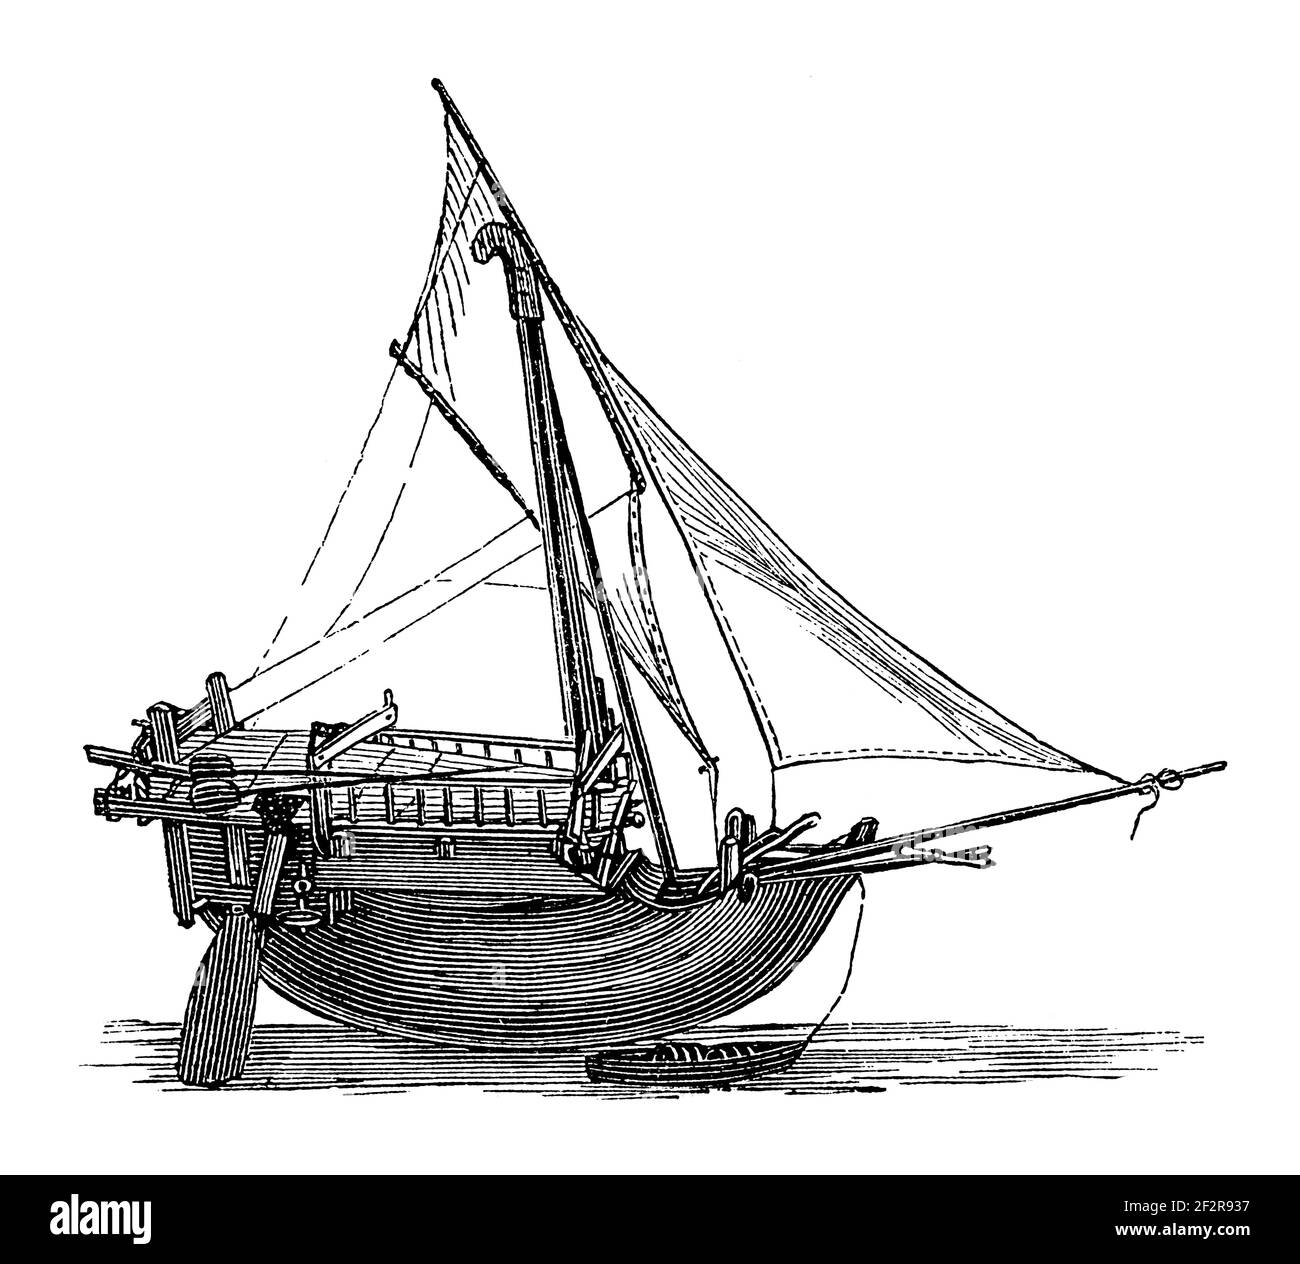 19th-century illustration of a ship from Sulawesi, Sunda Islands in Indonesia. Published in Systematischer Bilder-Atlas zum Conversations-Lexikon Stock Photo